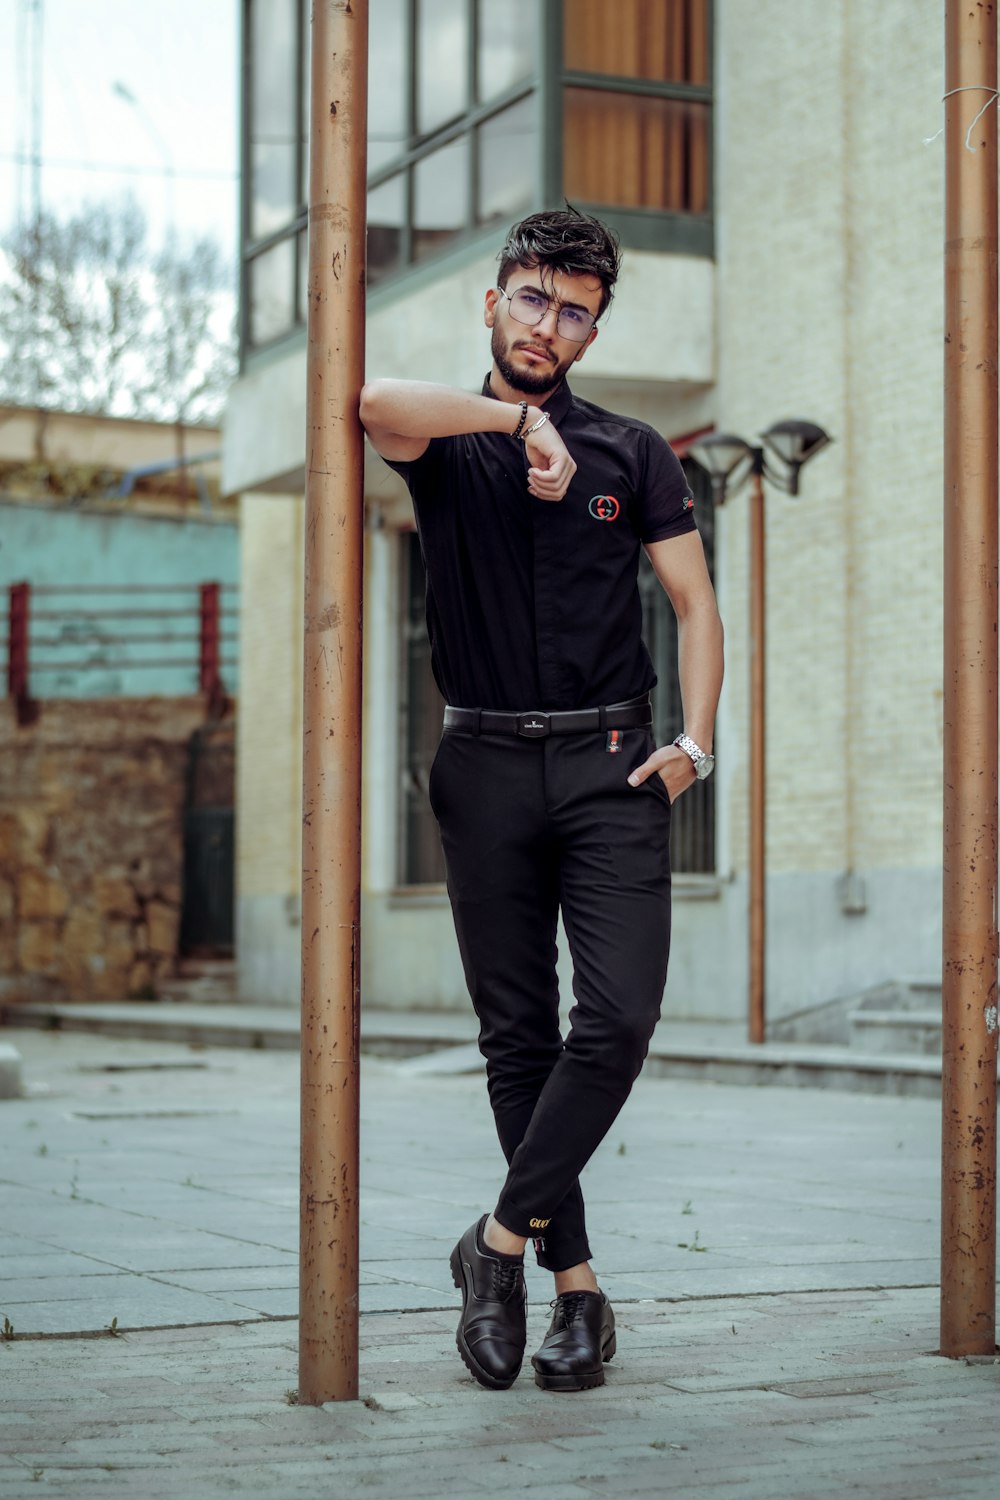 man in black polo shirt and black pants wearing black sunglasses standing  on sidewalk during daytime photo – Free Iranian Image on Unsplash